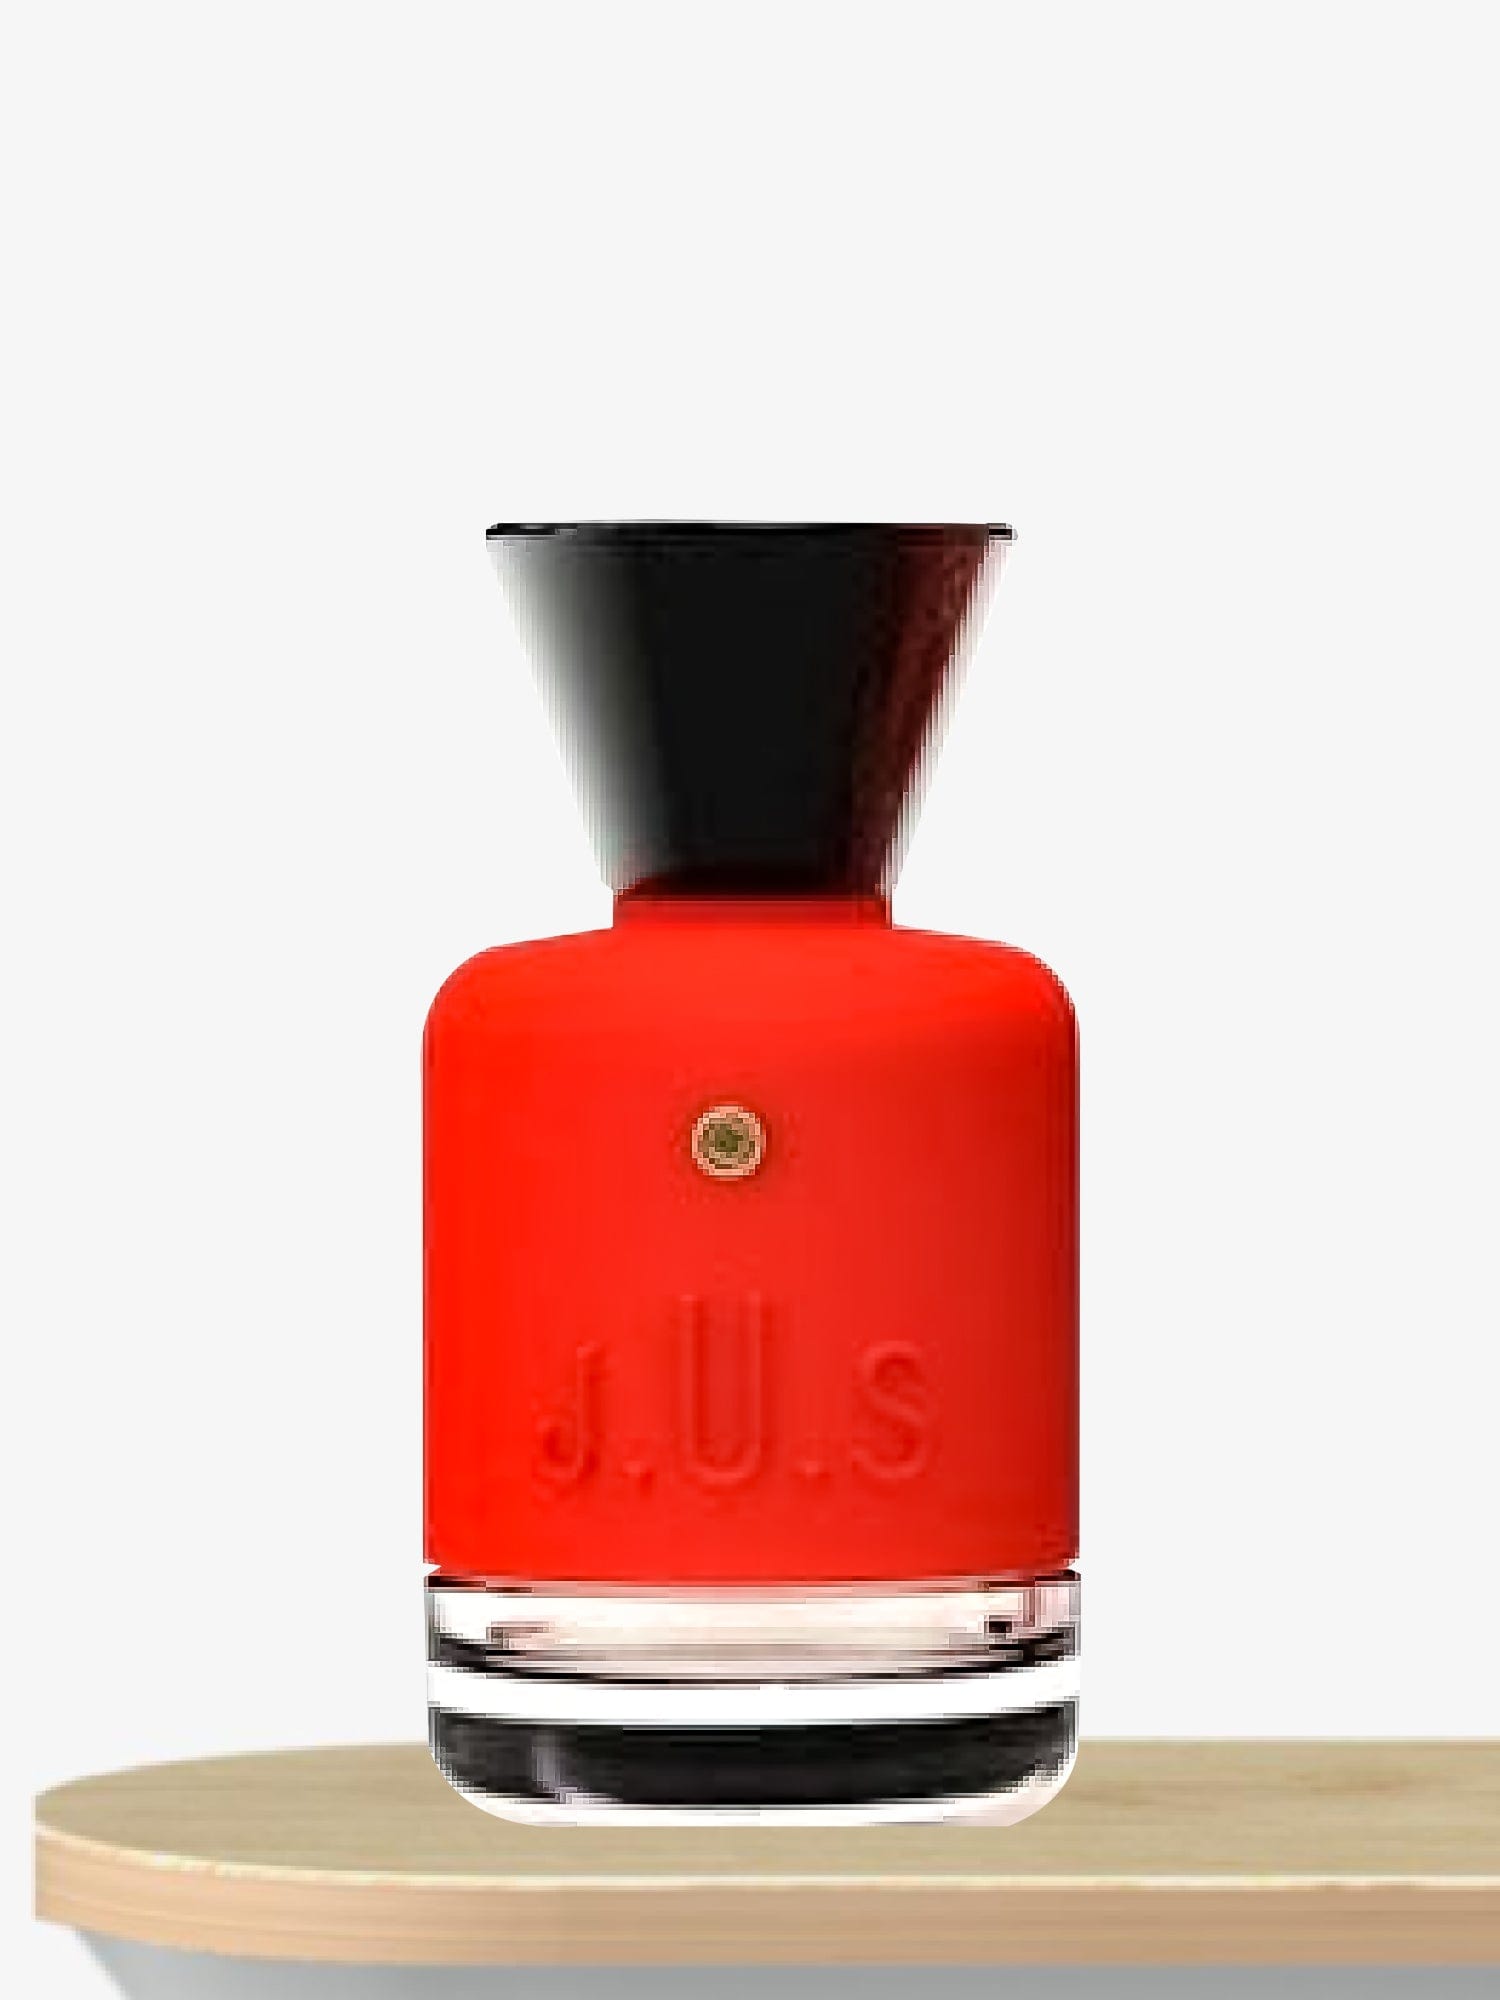 J.U.S Joyau Sensoriel Noiressence Parfum 100 mL / Unisex